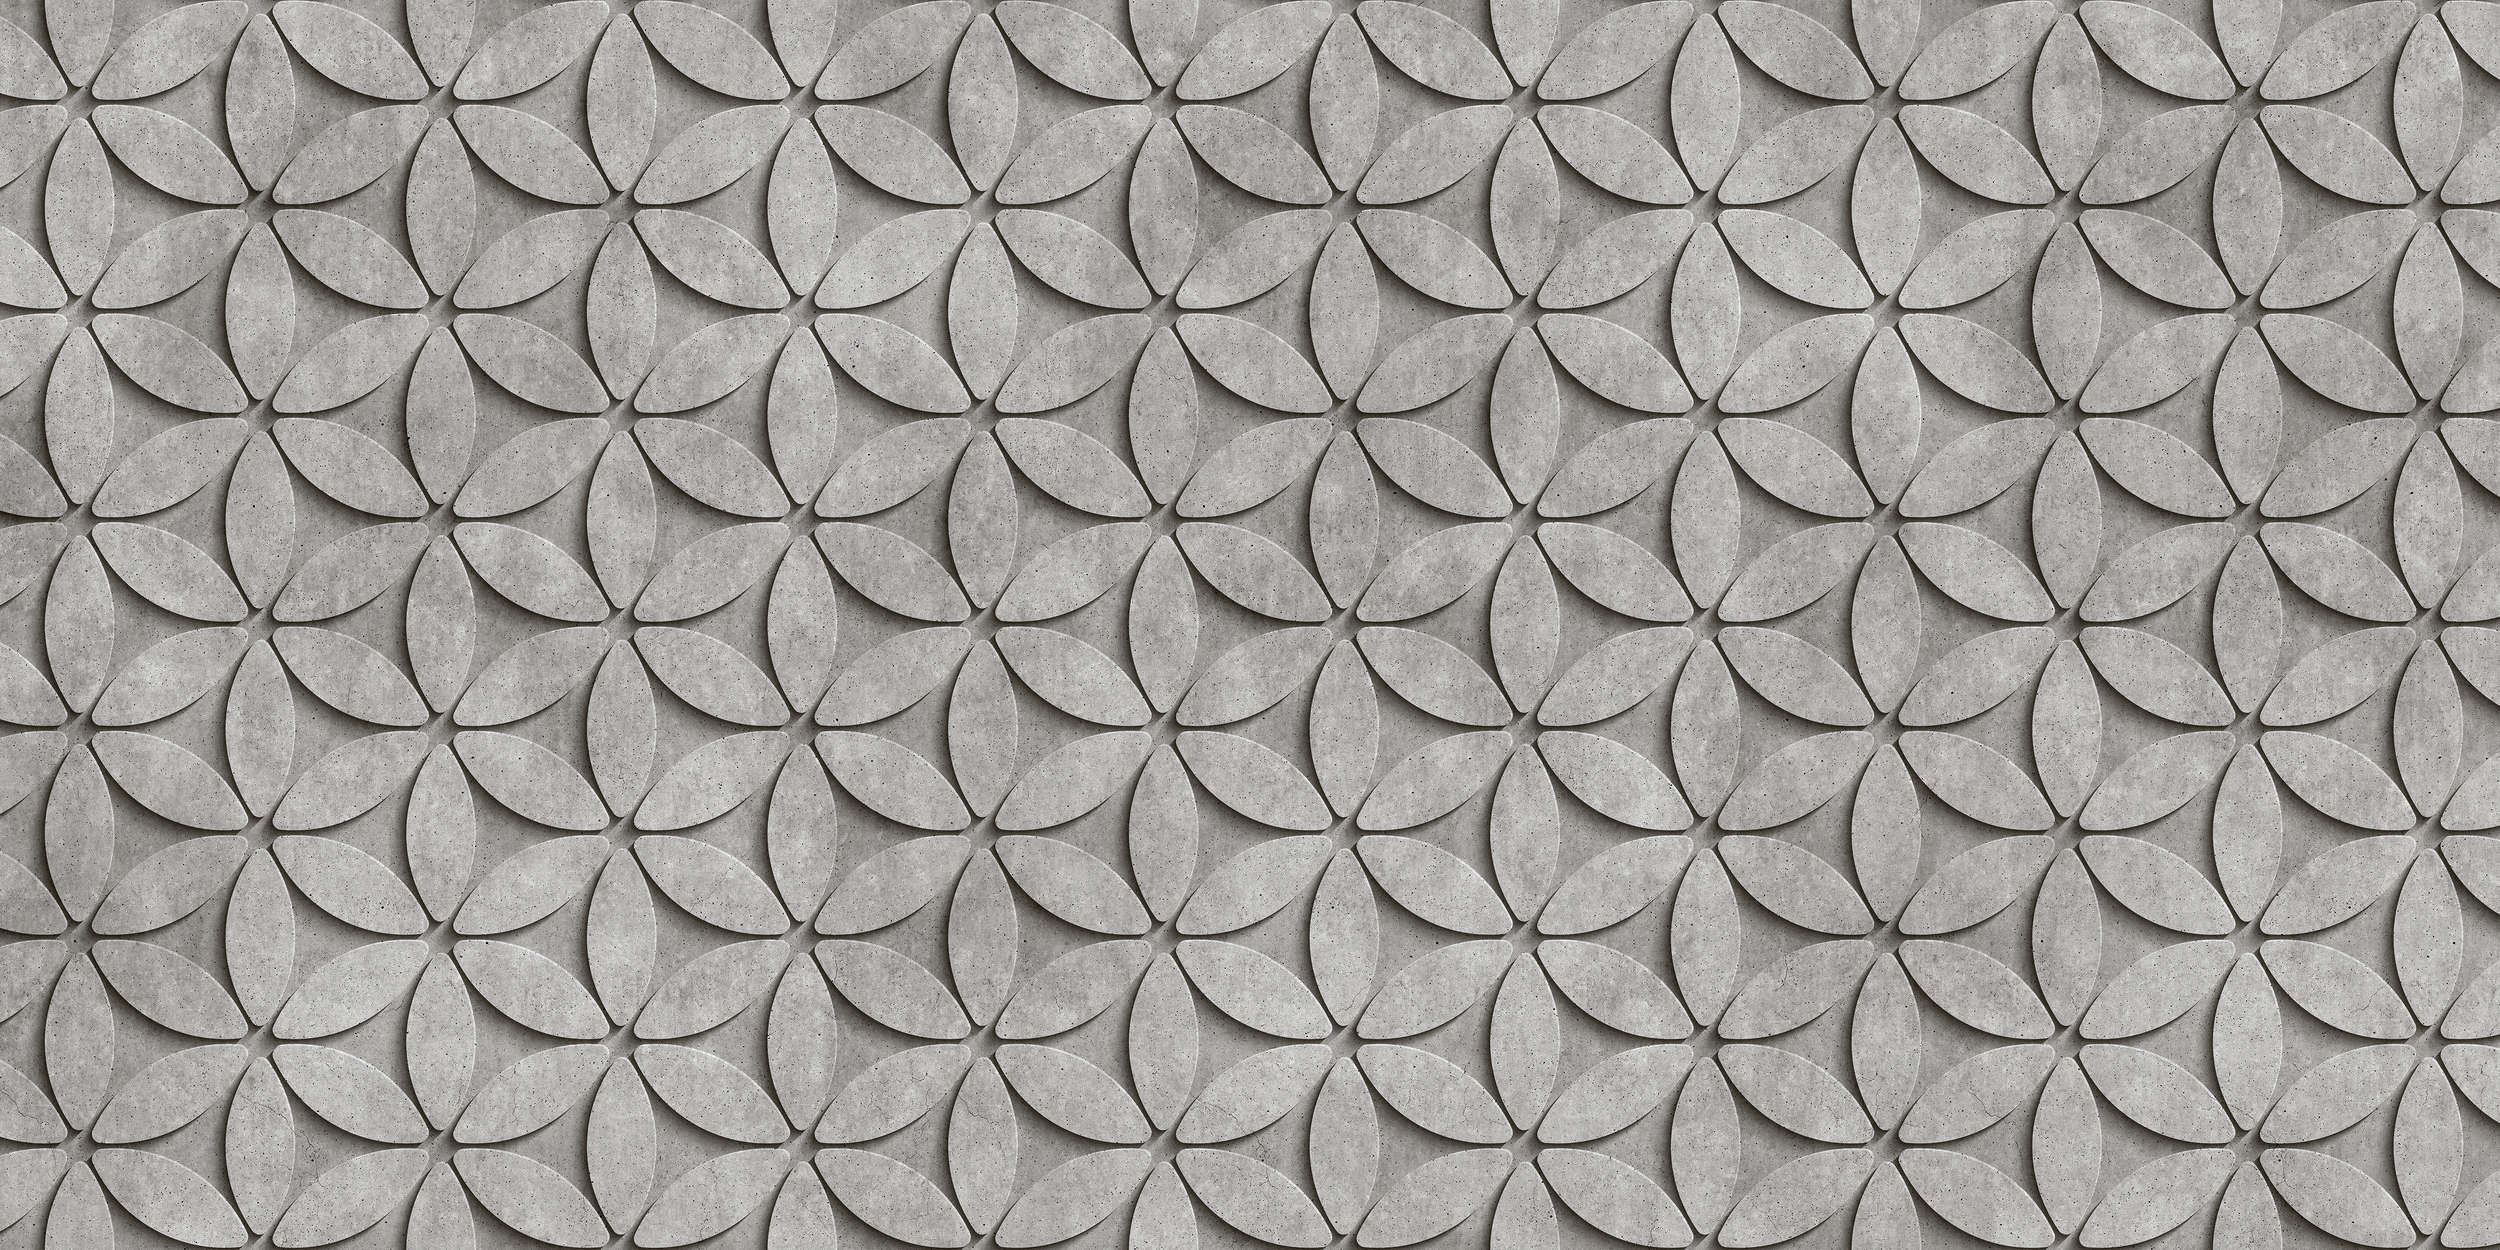             Tile 1 - Wallpaper in Cool 3D Concrete Polygons - Grey, Black | Premium Smooth Non-woven
        